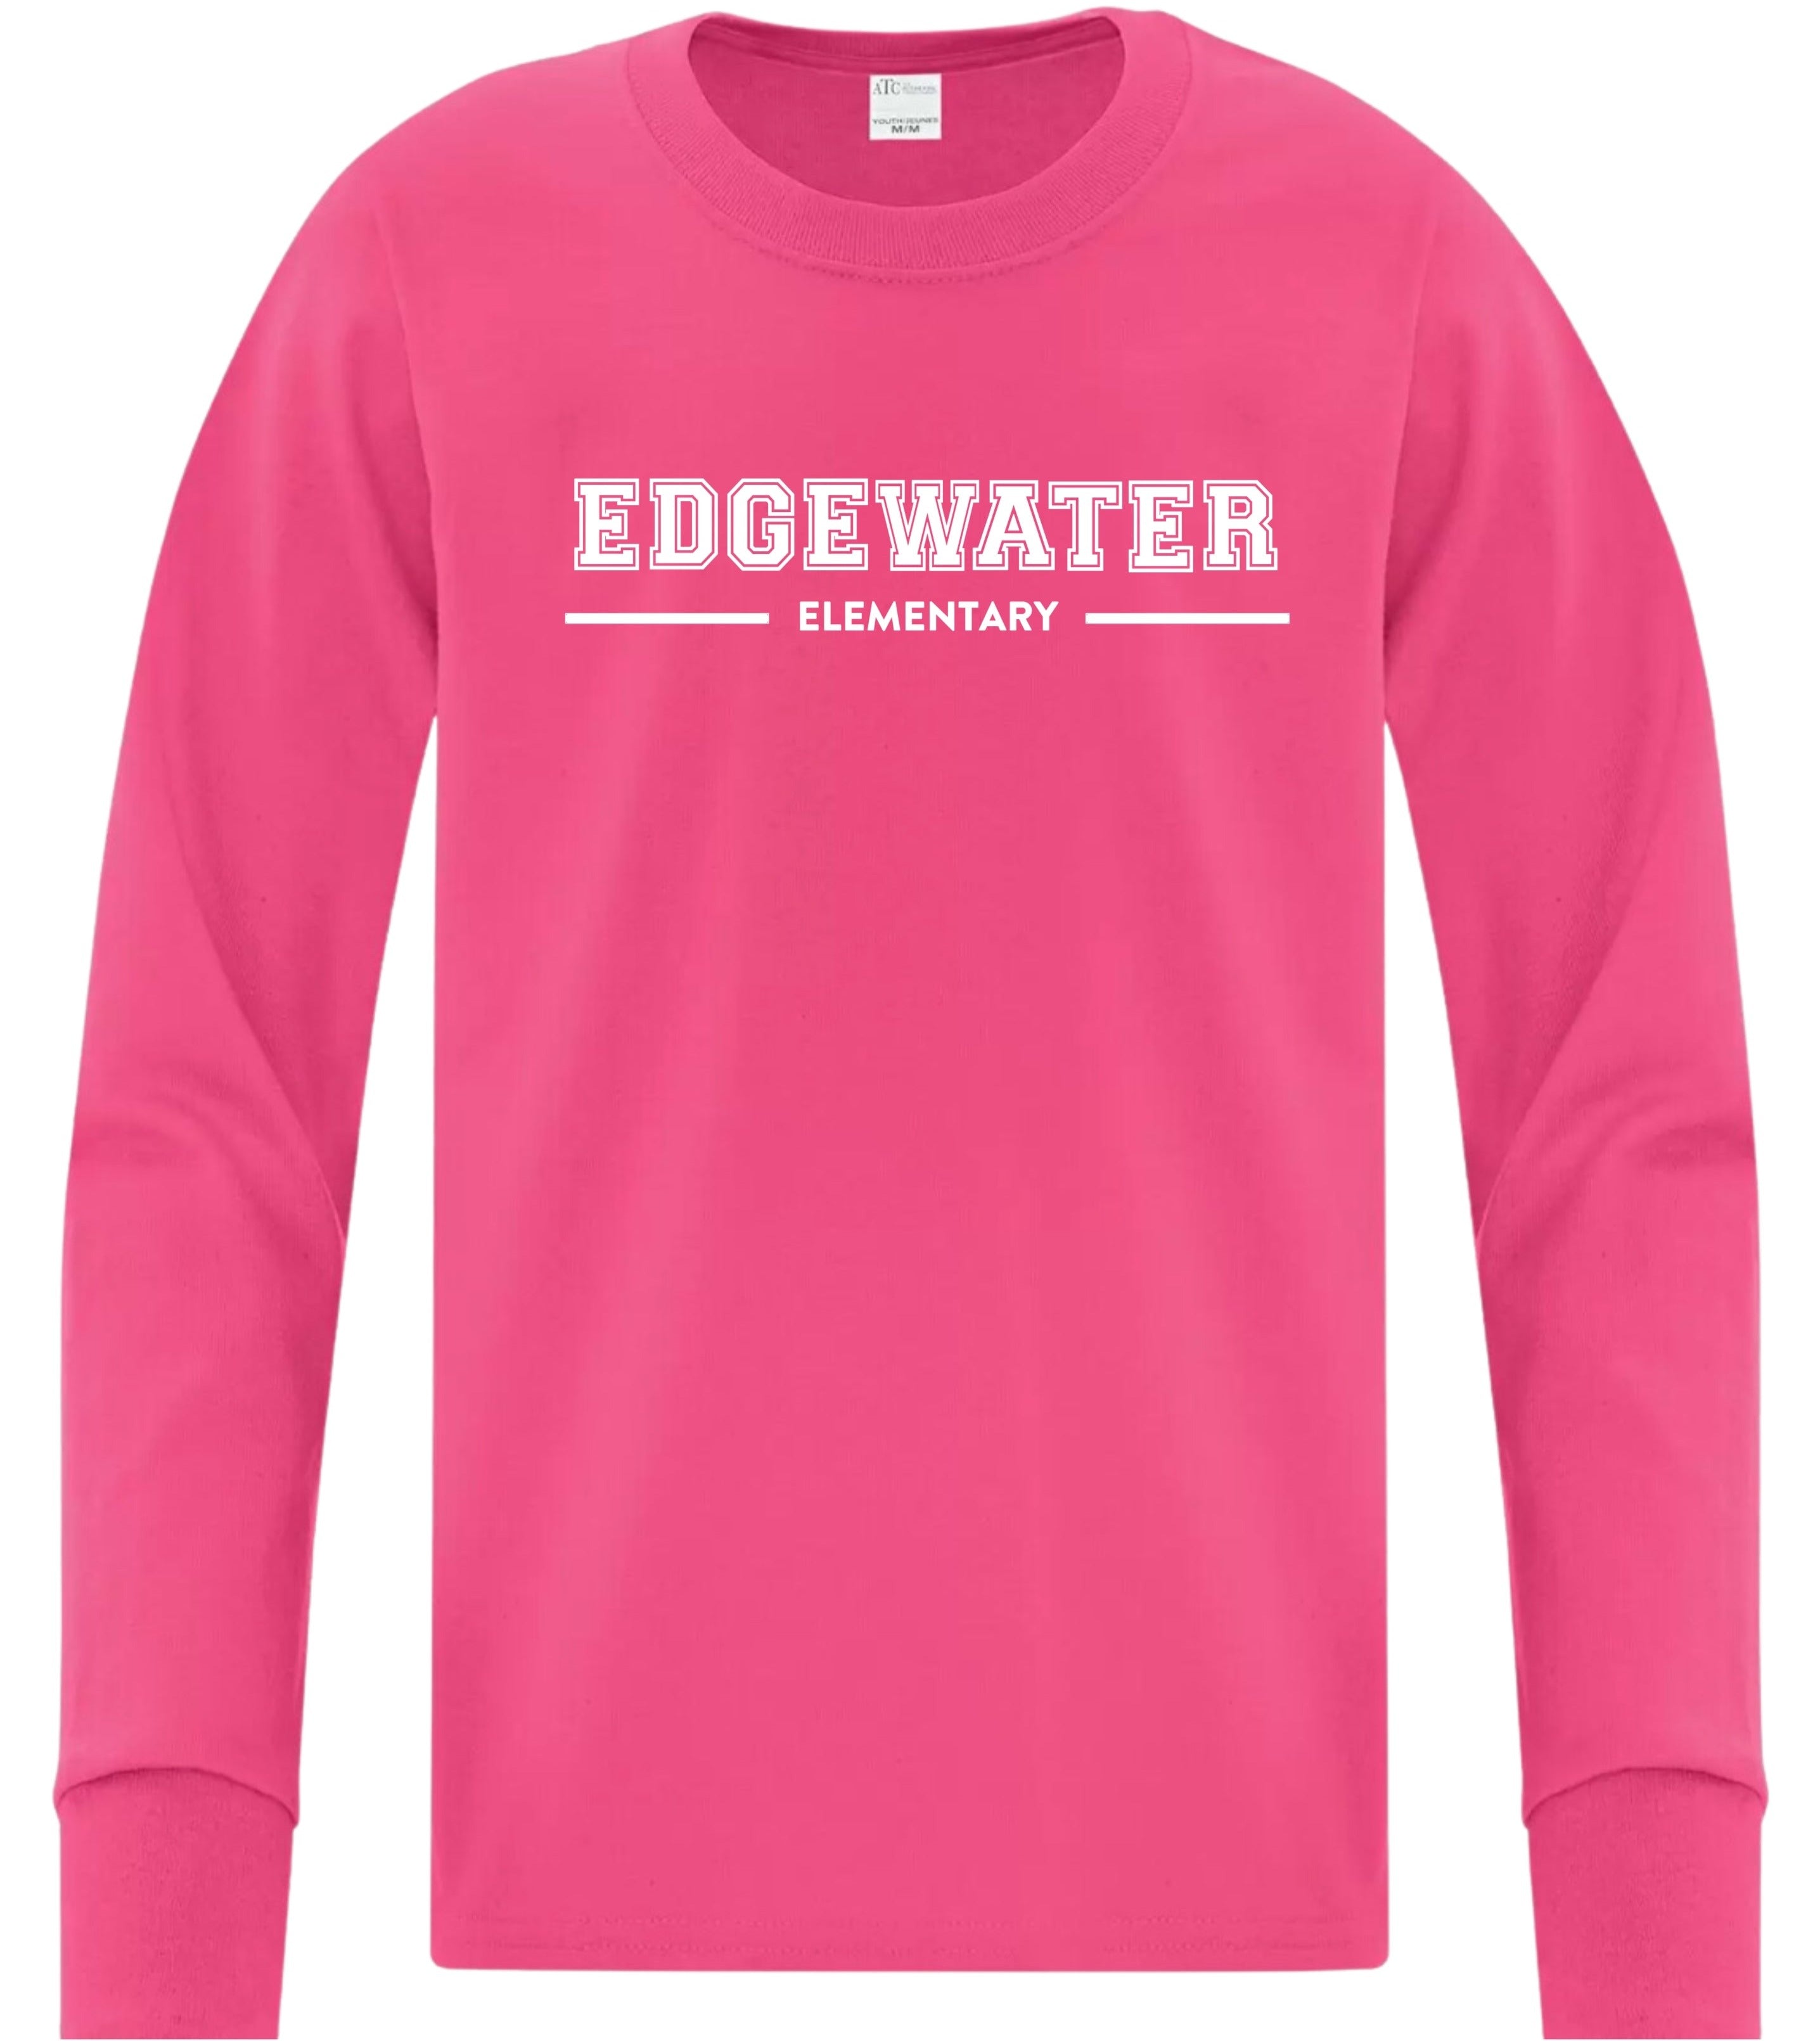 Edgewater Youth Long Sleeve T-Shirt